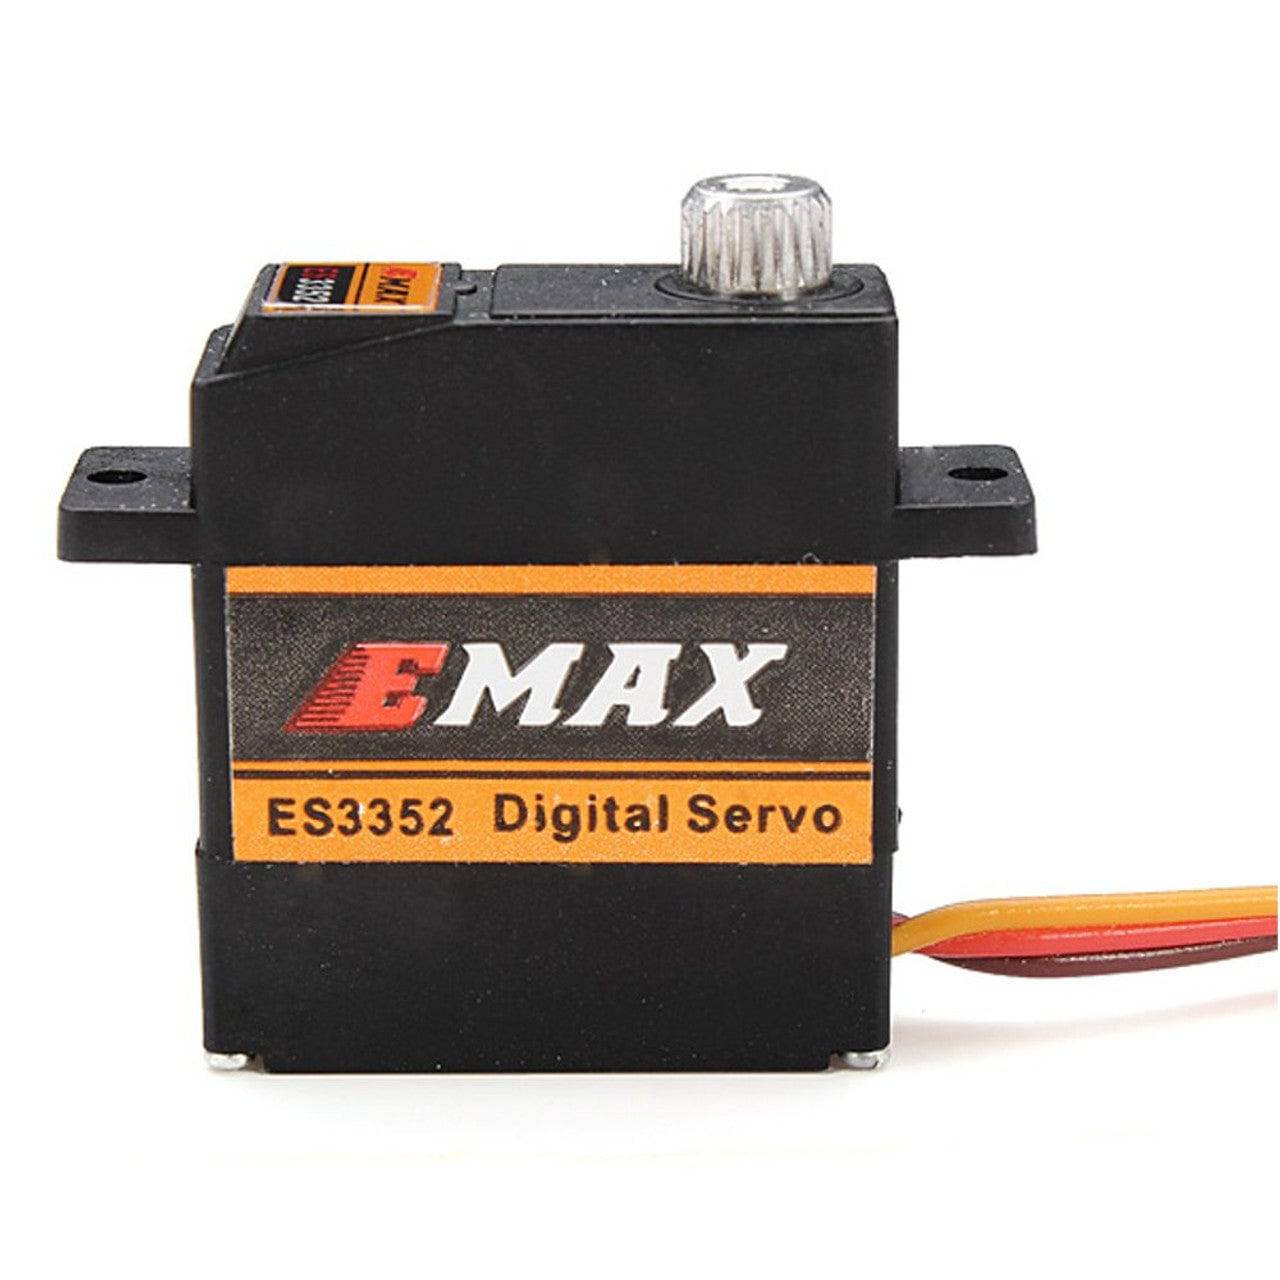 EMAX ES3352 12.4g Mini Metal Gear Digital Servo for RC Airplane - REES52